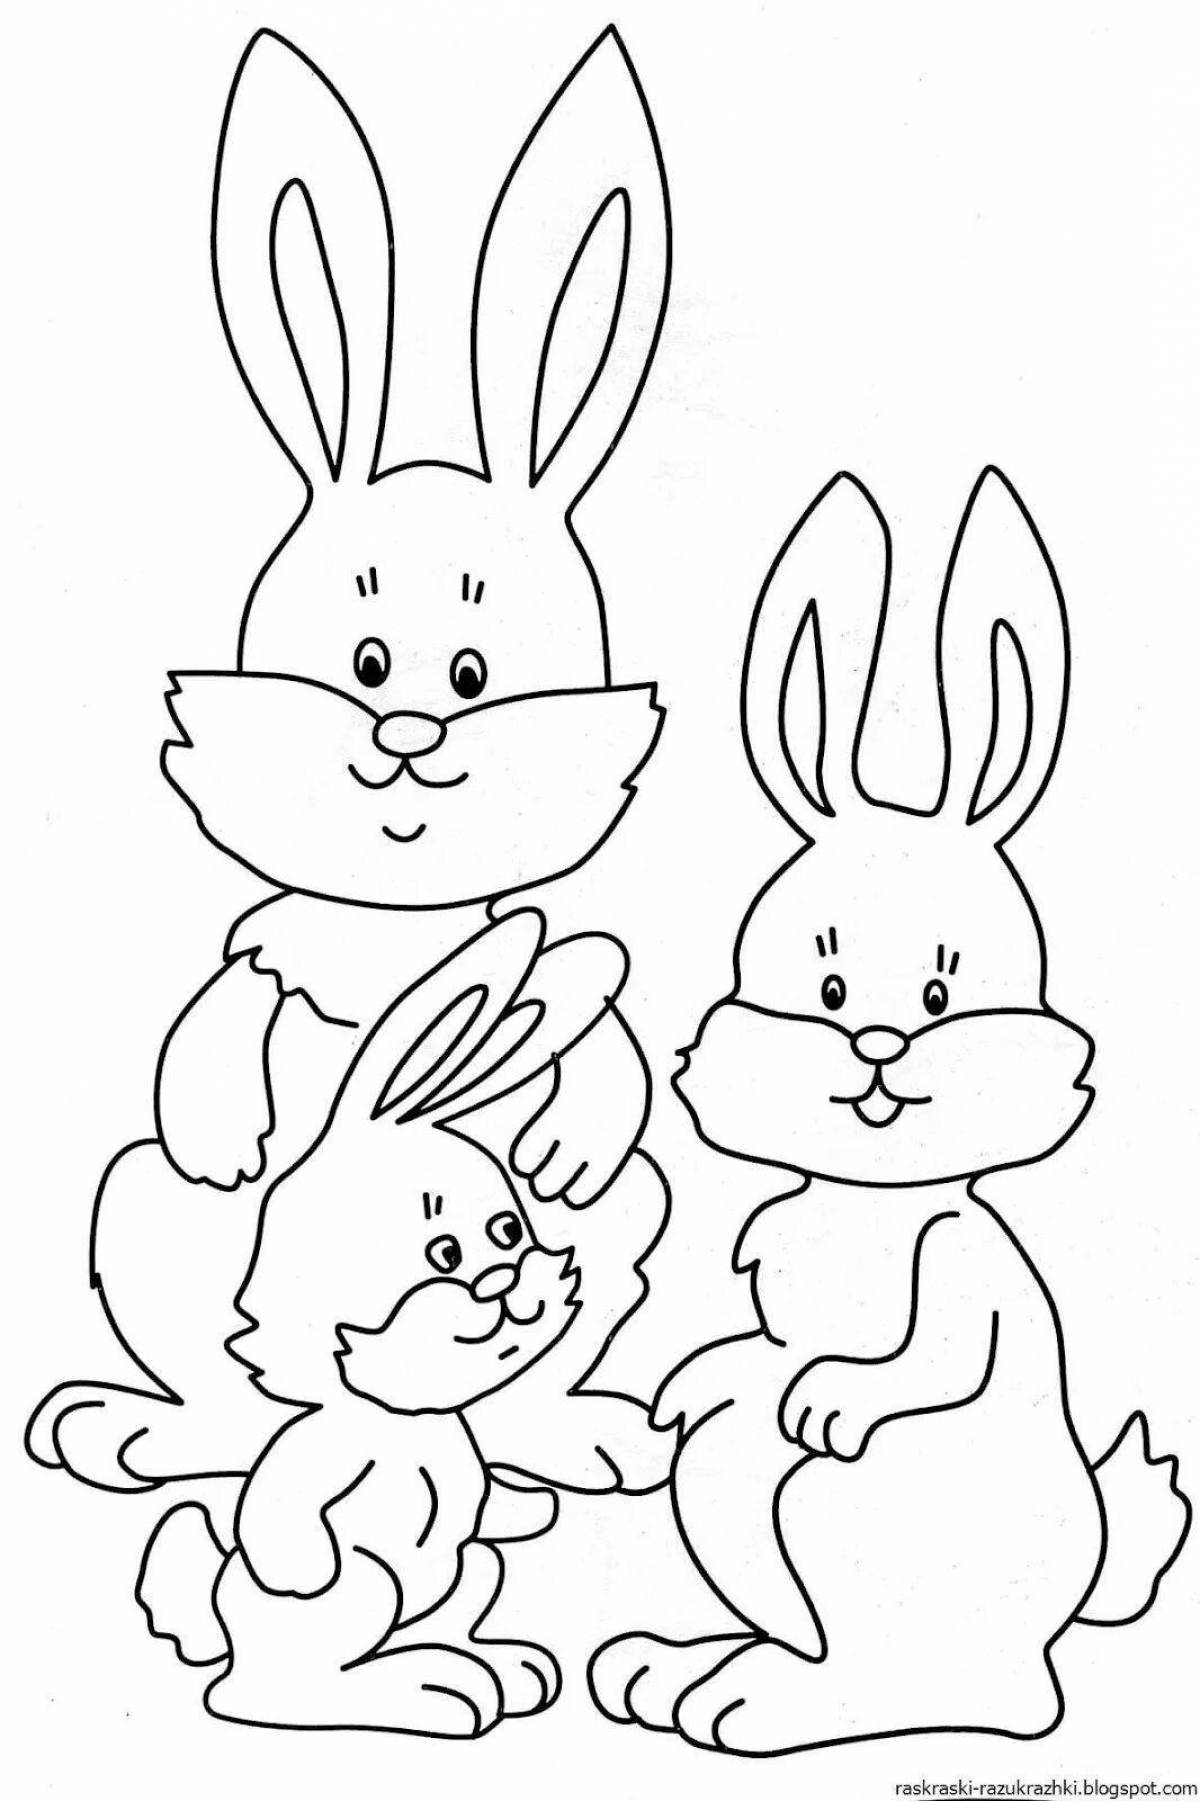 Colouring bright rabbit for children